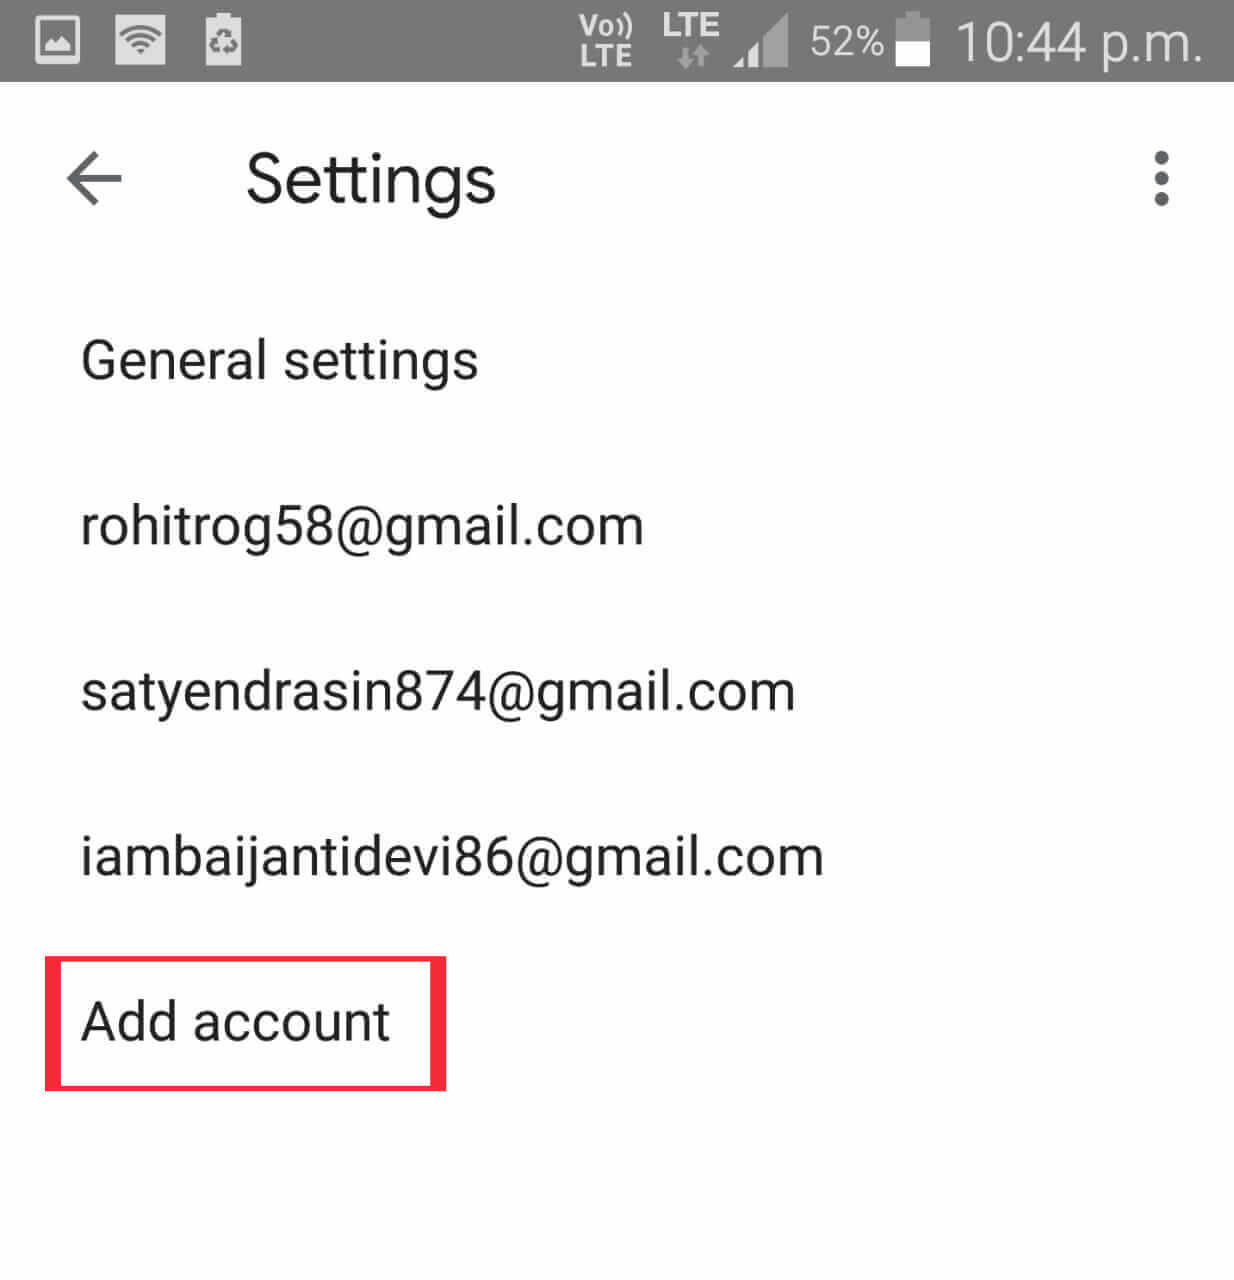 Add account under settings